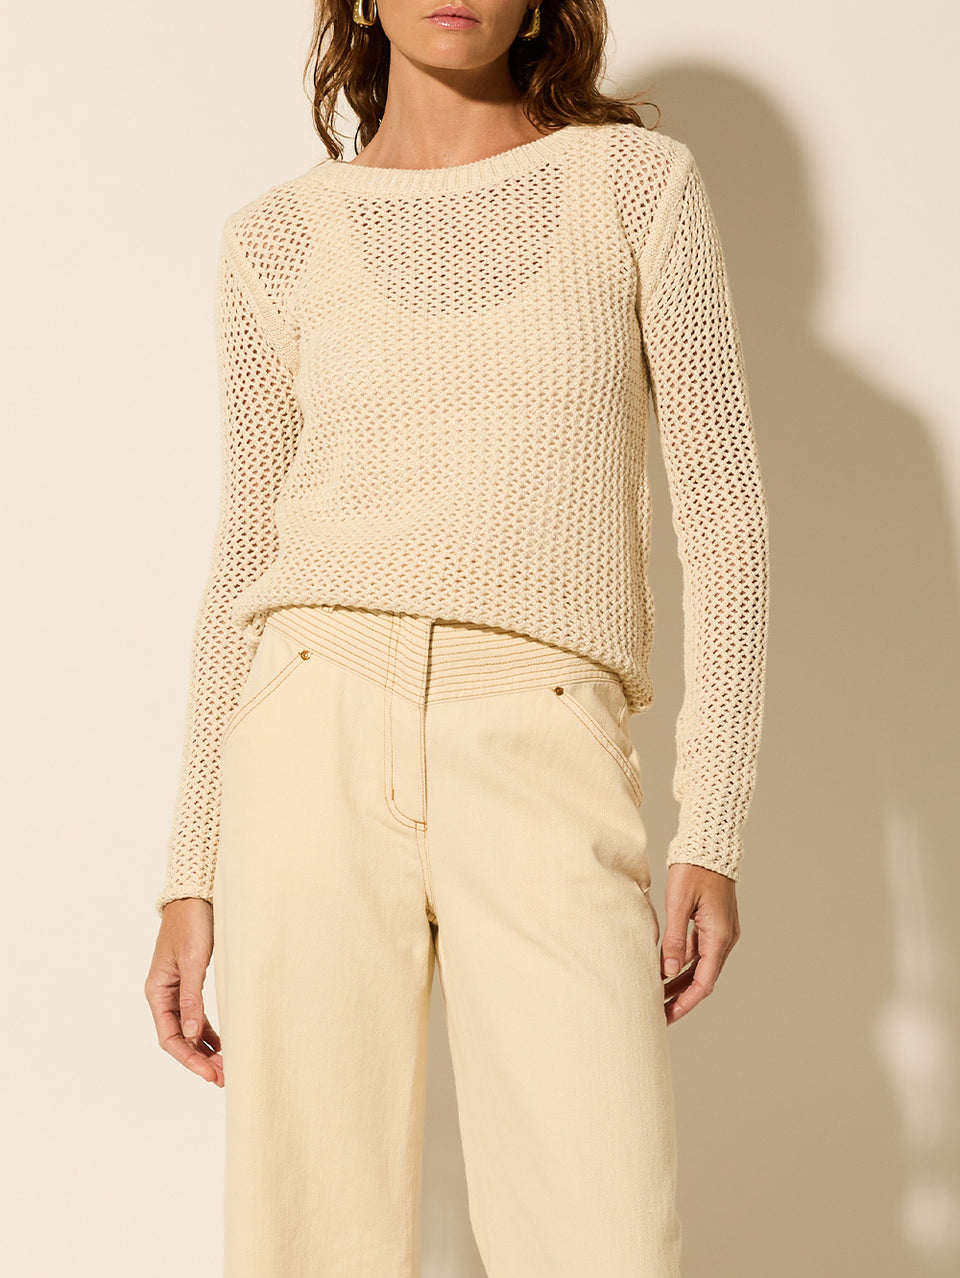 Eliana Knit Cream KIVARI | Model wears cream knit top